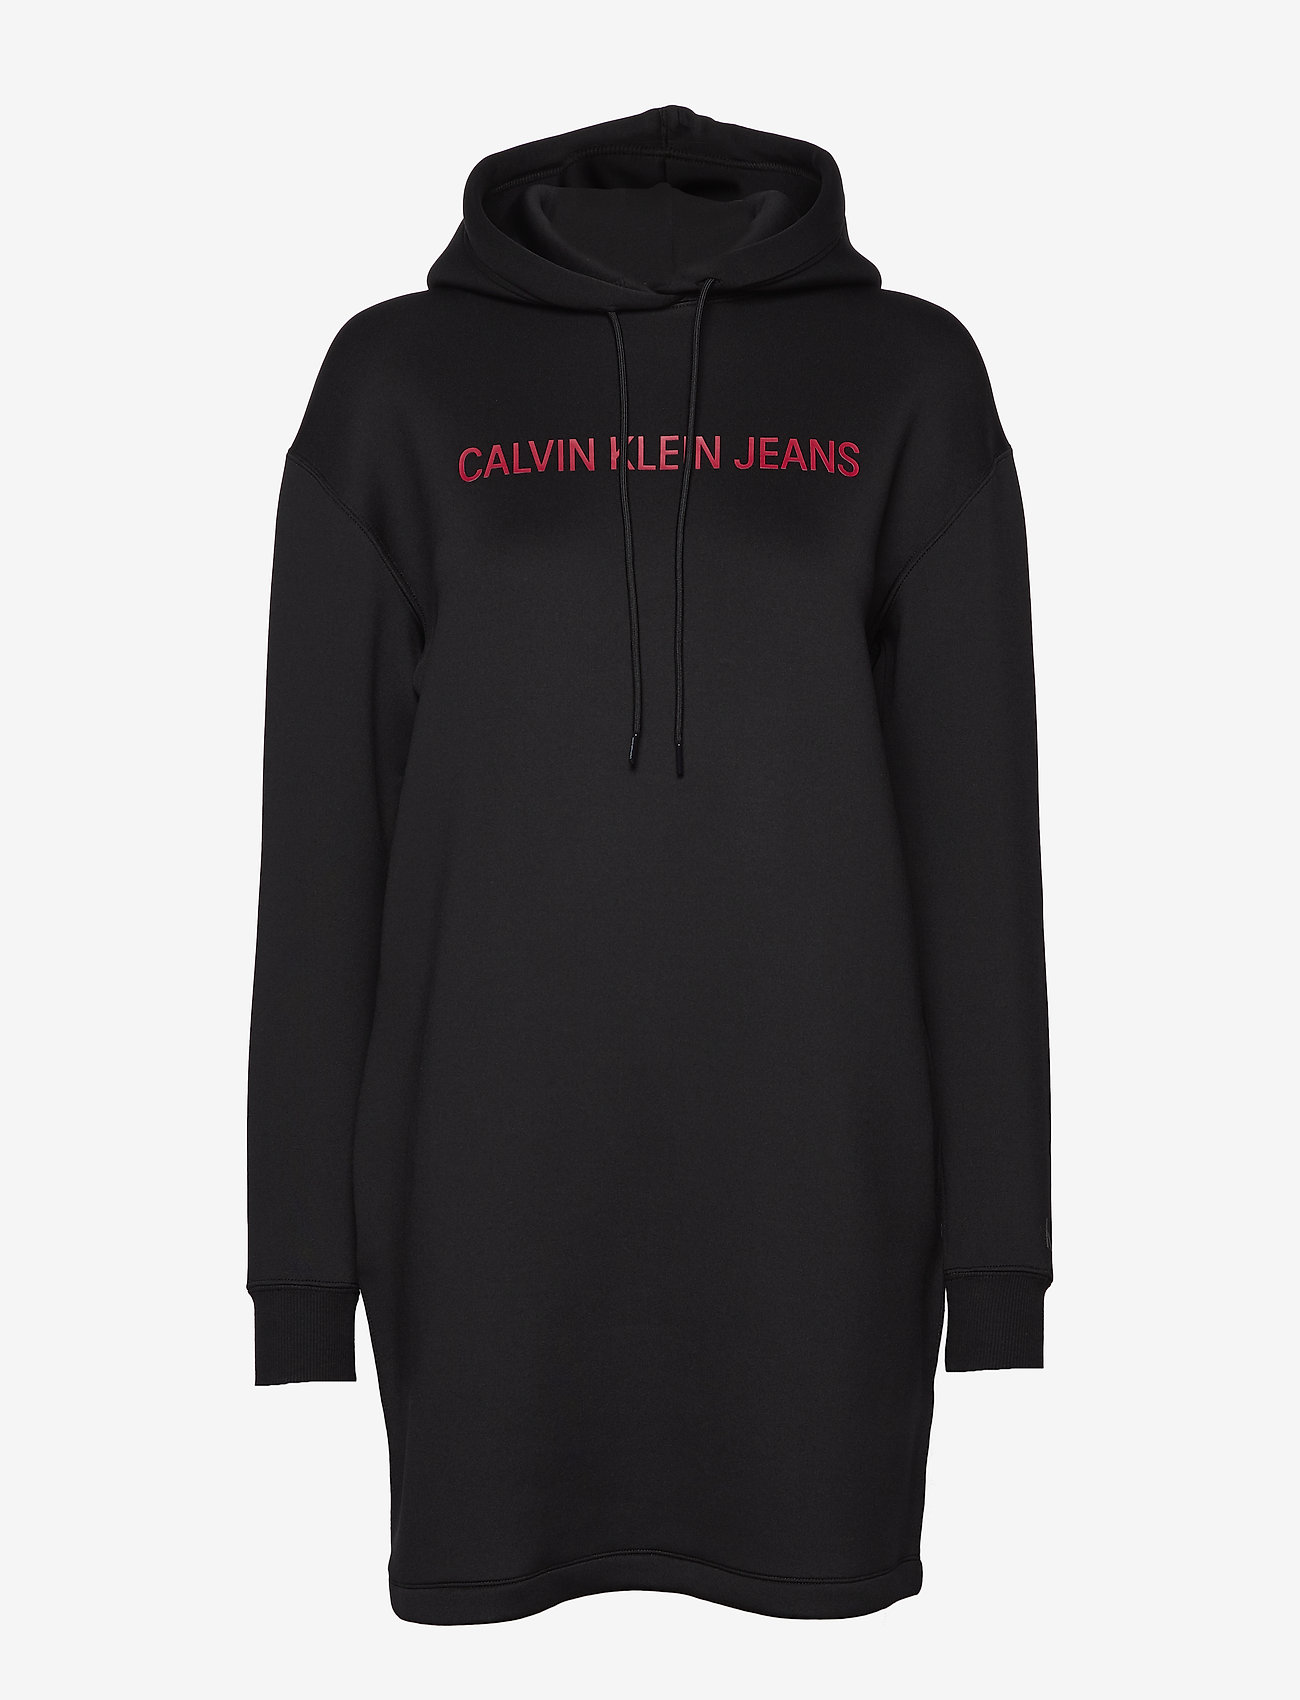 calvin klein hoodie dress